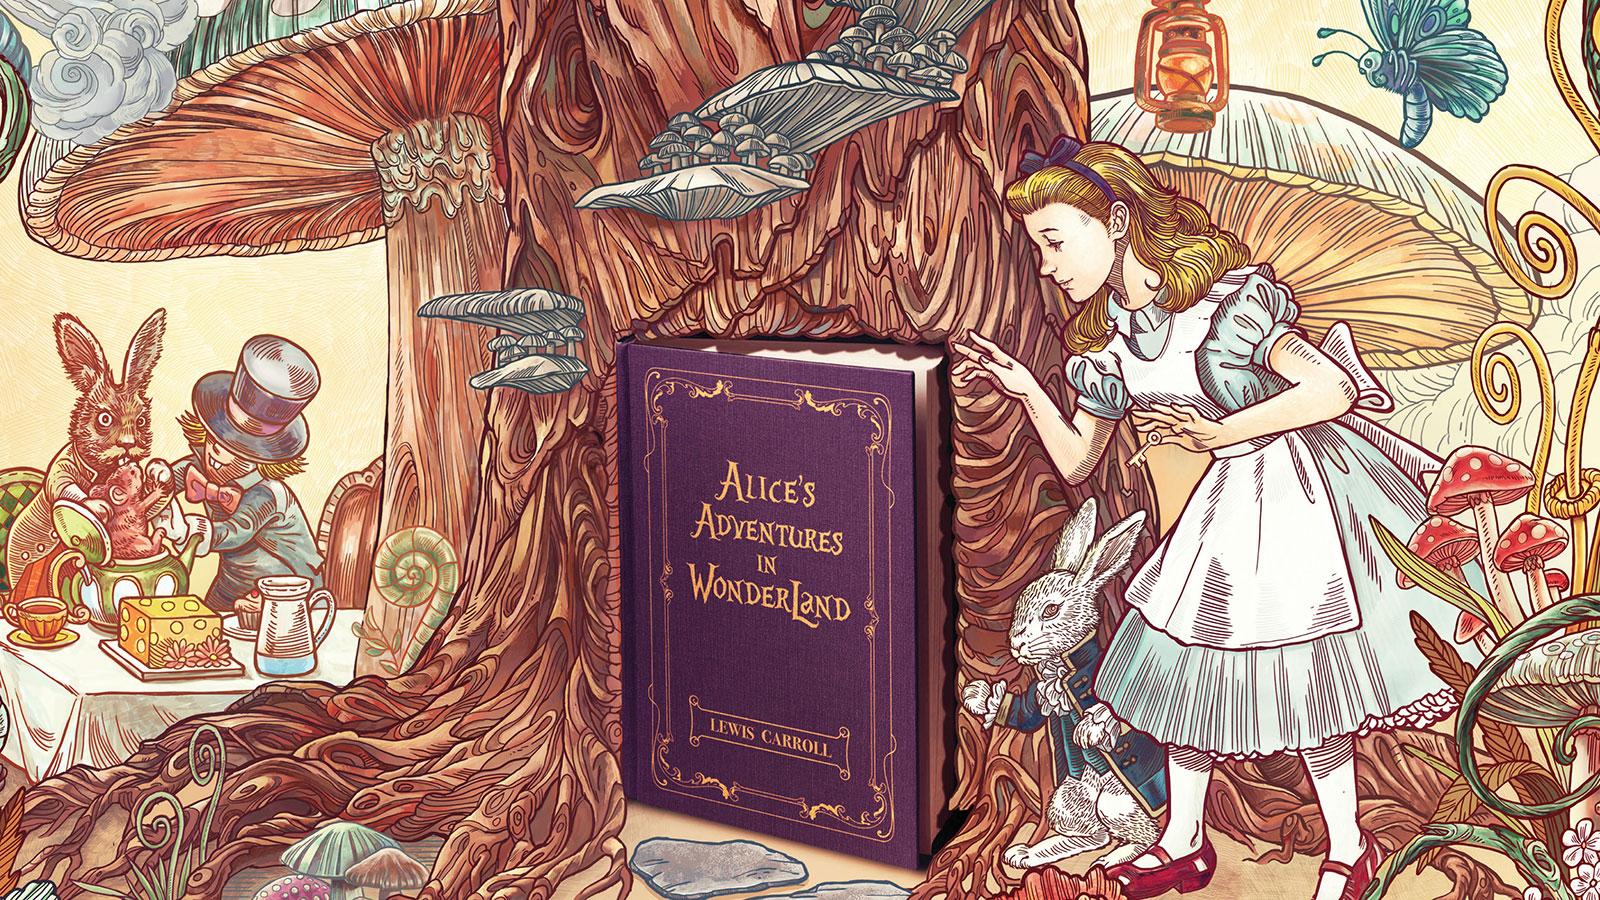 В стране чудес 11 глава. Льюис Кэрролл Алиса. Льюис Кэрролл Алиса в Зазеркалье иллюстрации. Кэрролл Льюис "Алиса в стране чудес". Льюис Кэрролл в Алисе в стране чудес.